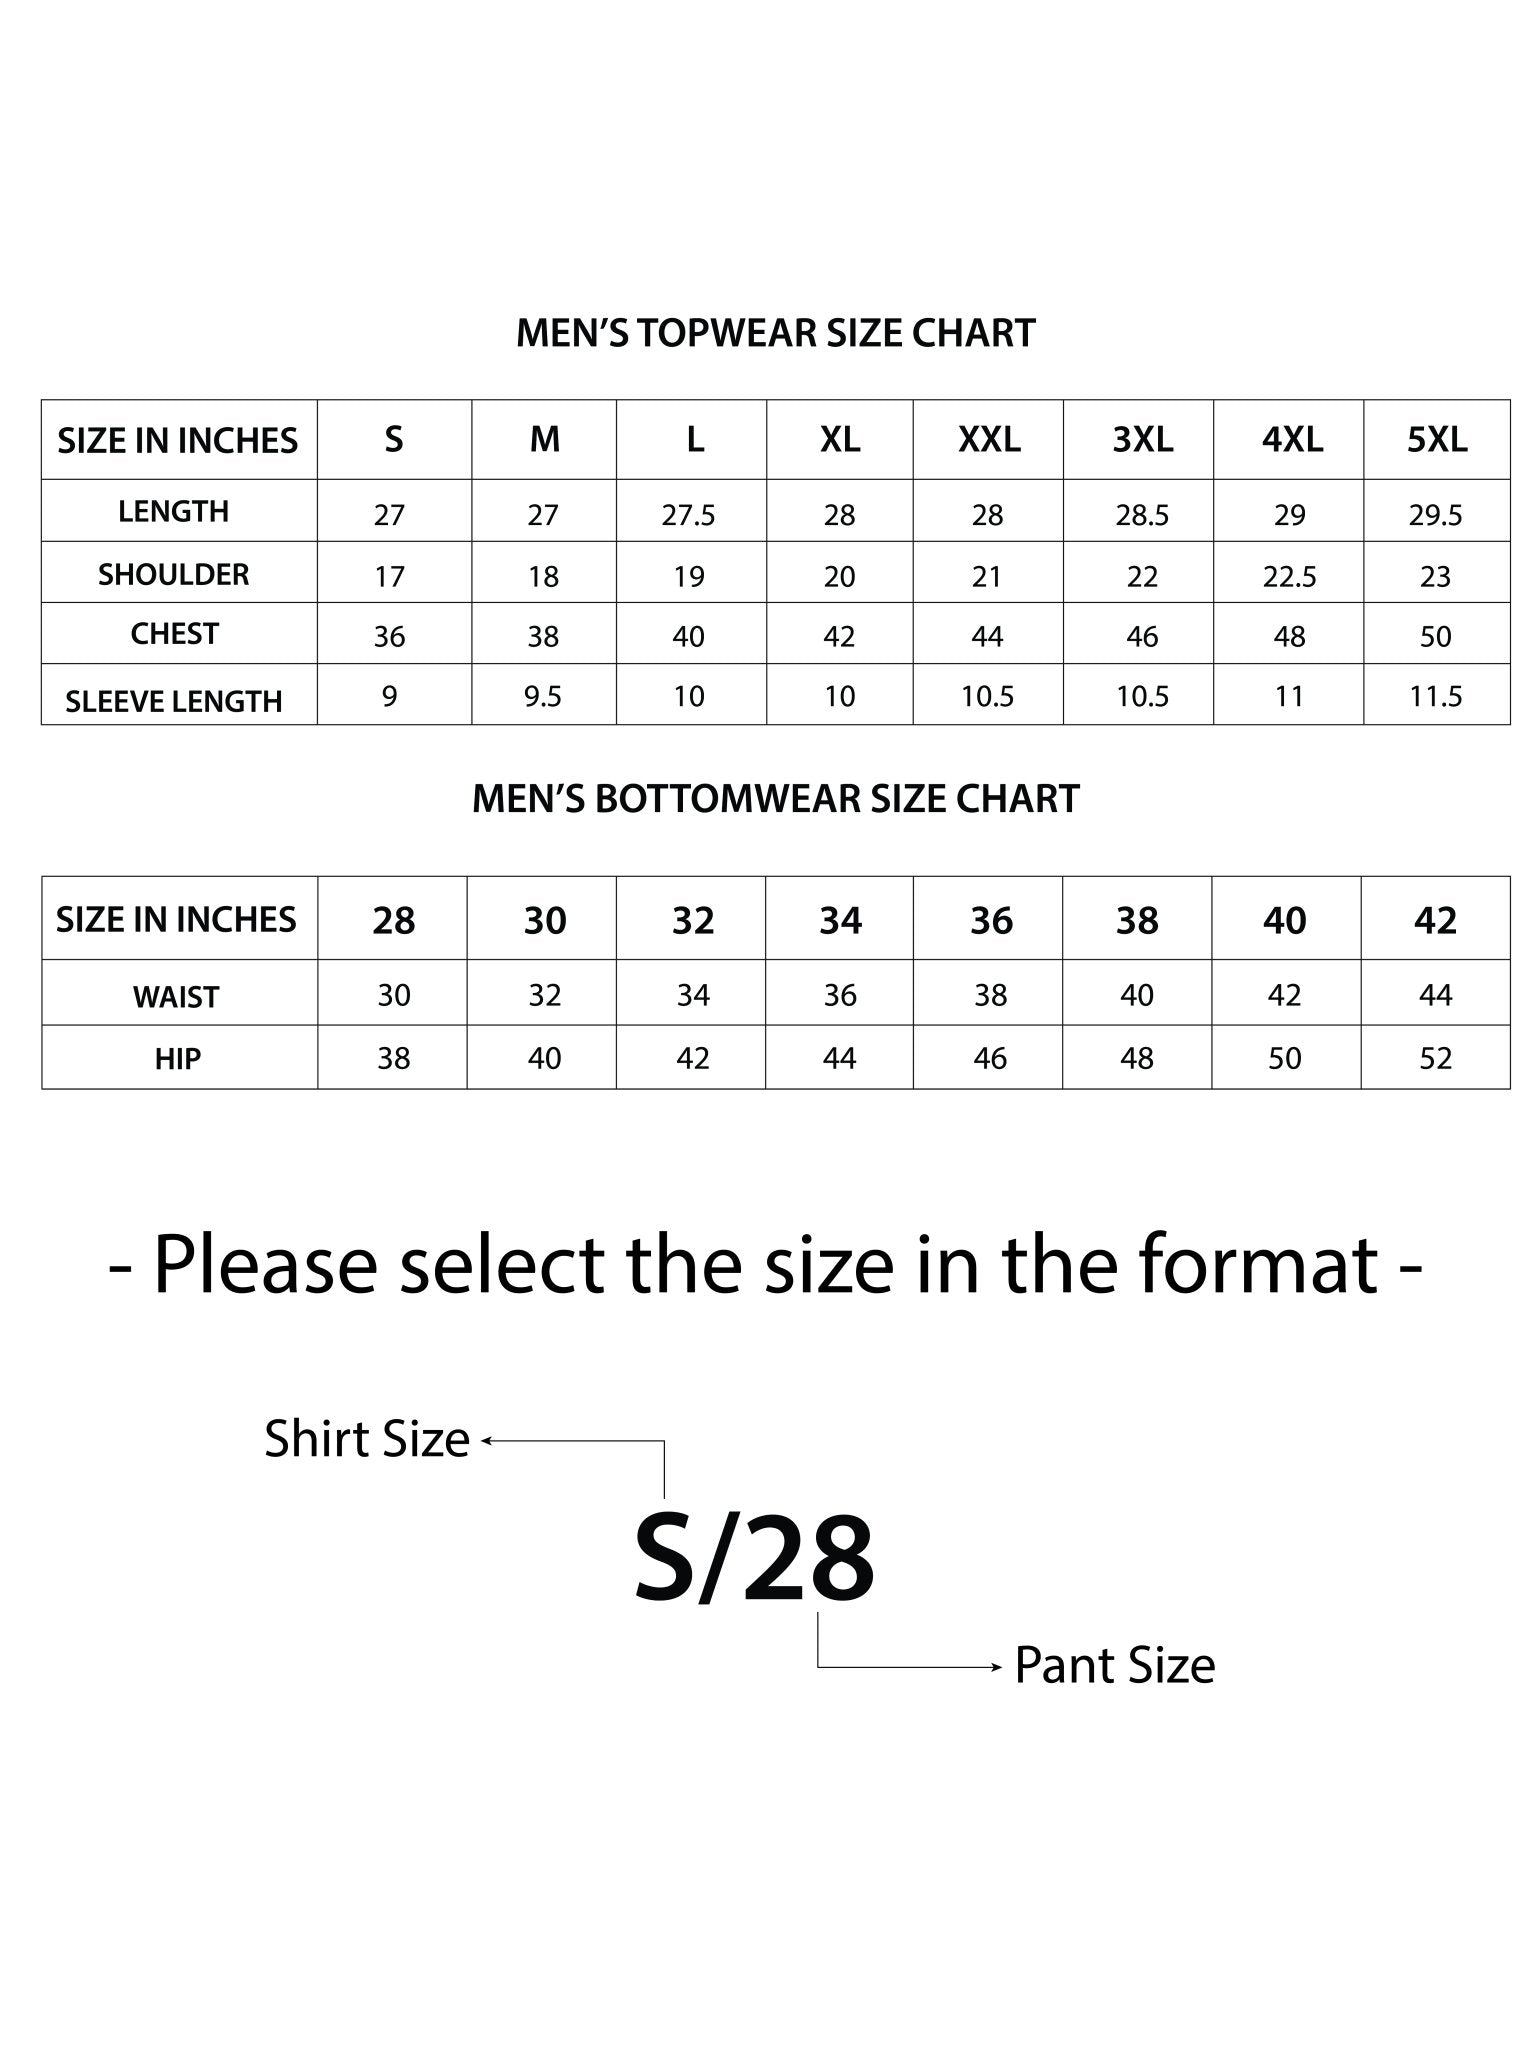 Wave Polo & Fit Bloke Pants Combo - Shirt & Pant